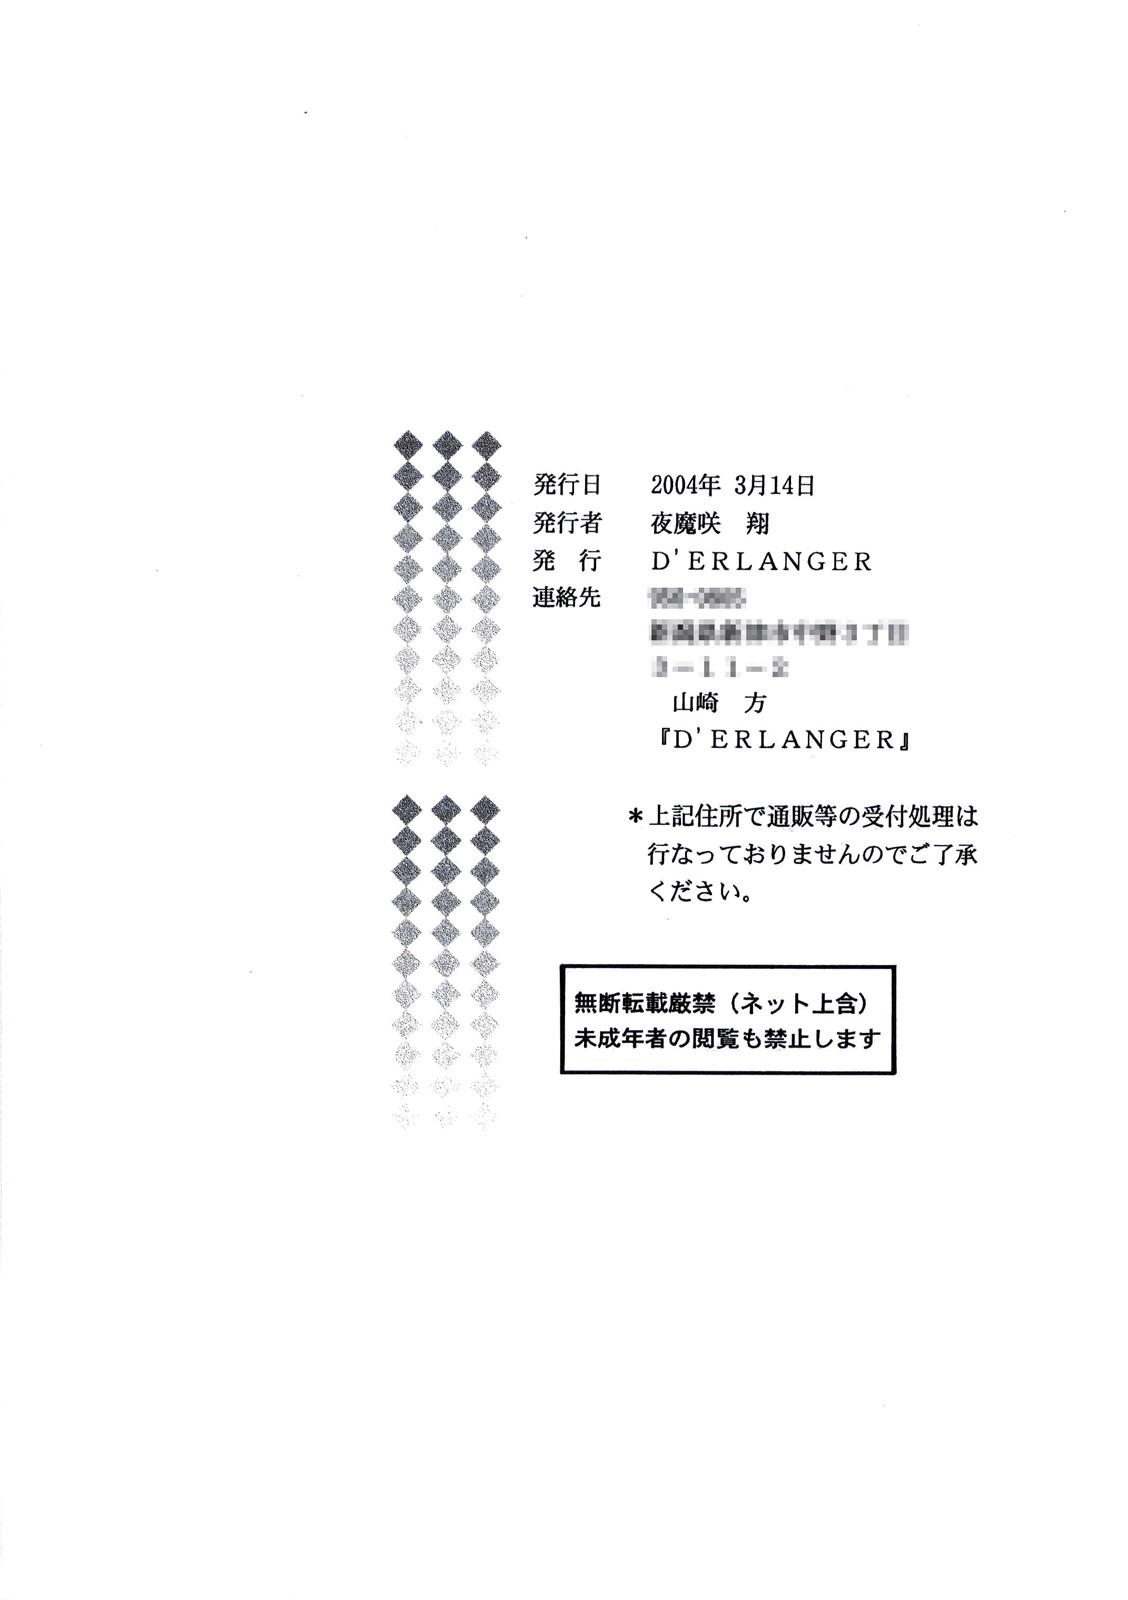 Masakazu VOLUME:3.5 21